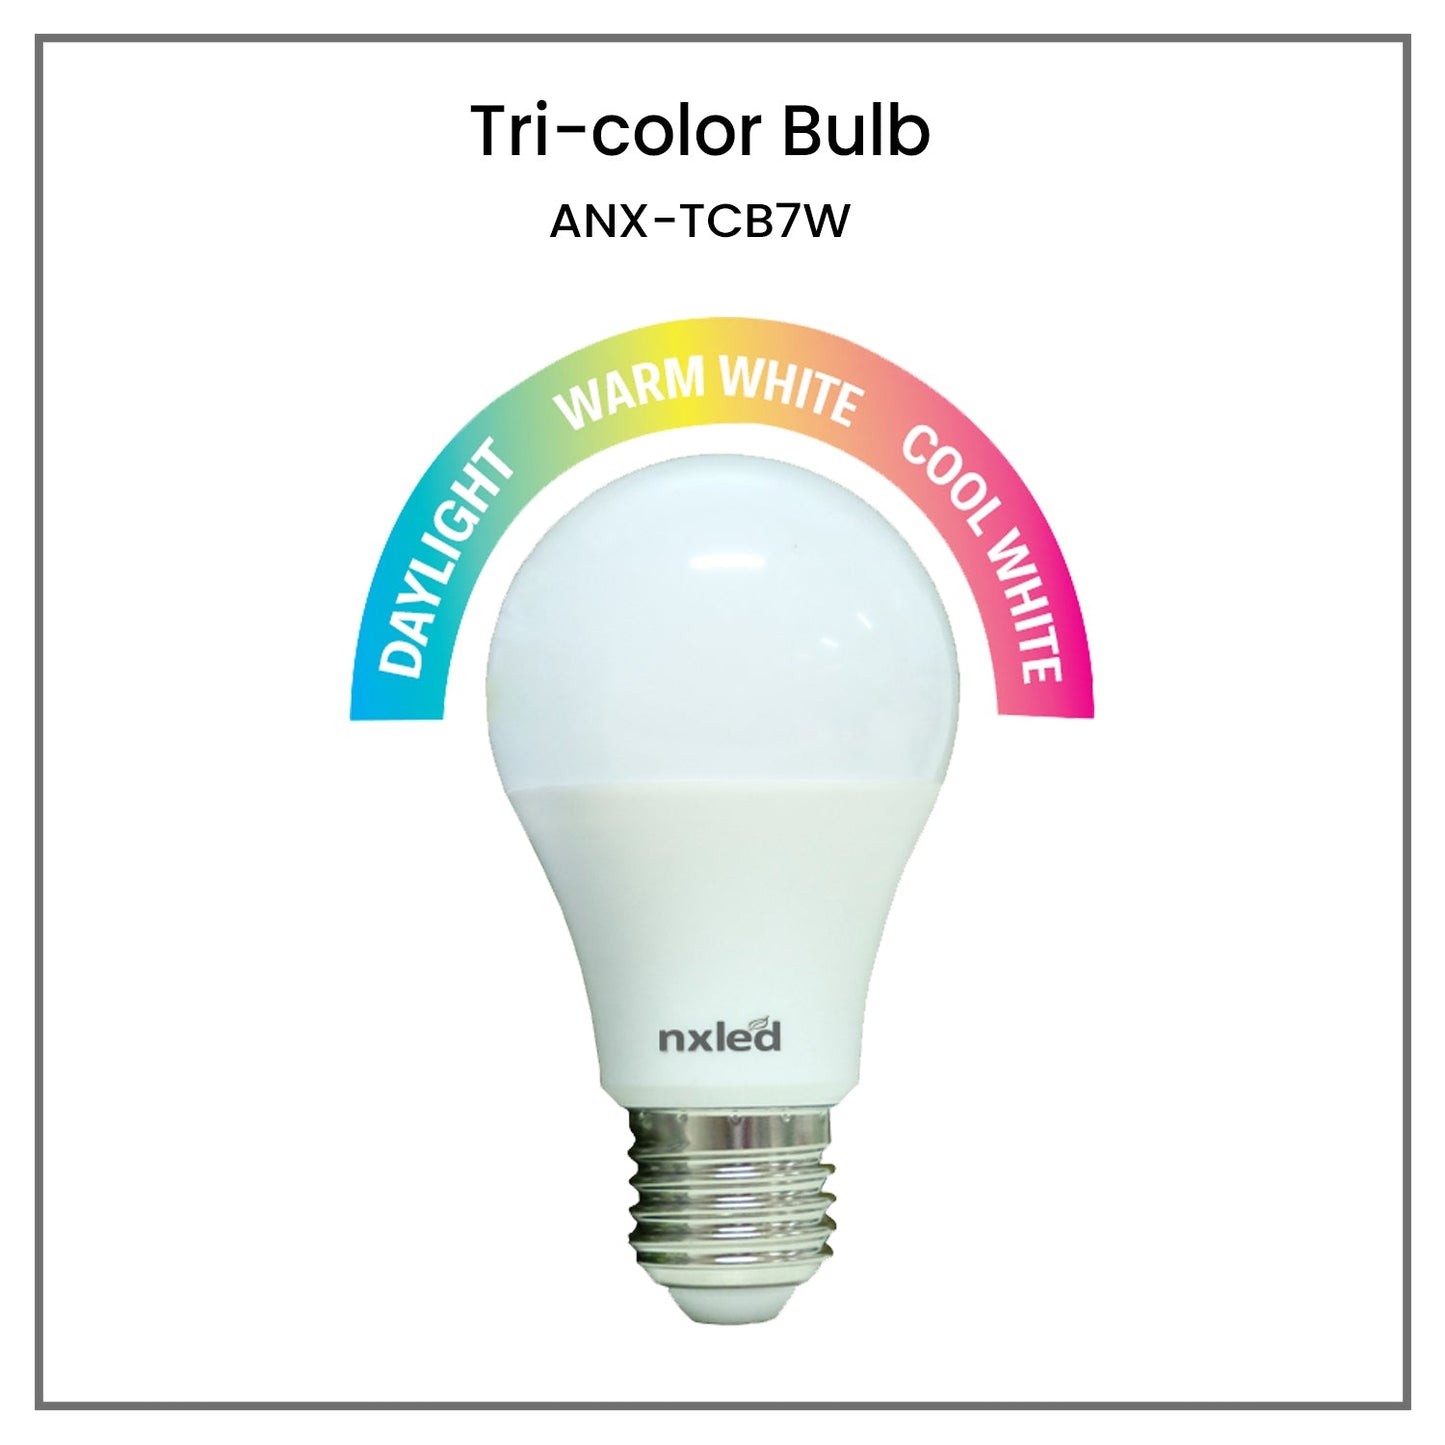 Nxled 7W LED Tri-Color Bulb (ANX-TCB7W)